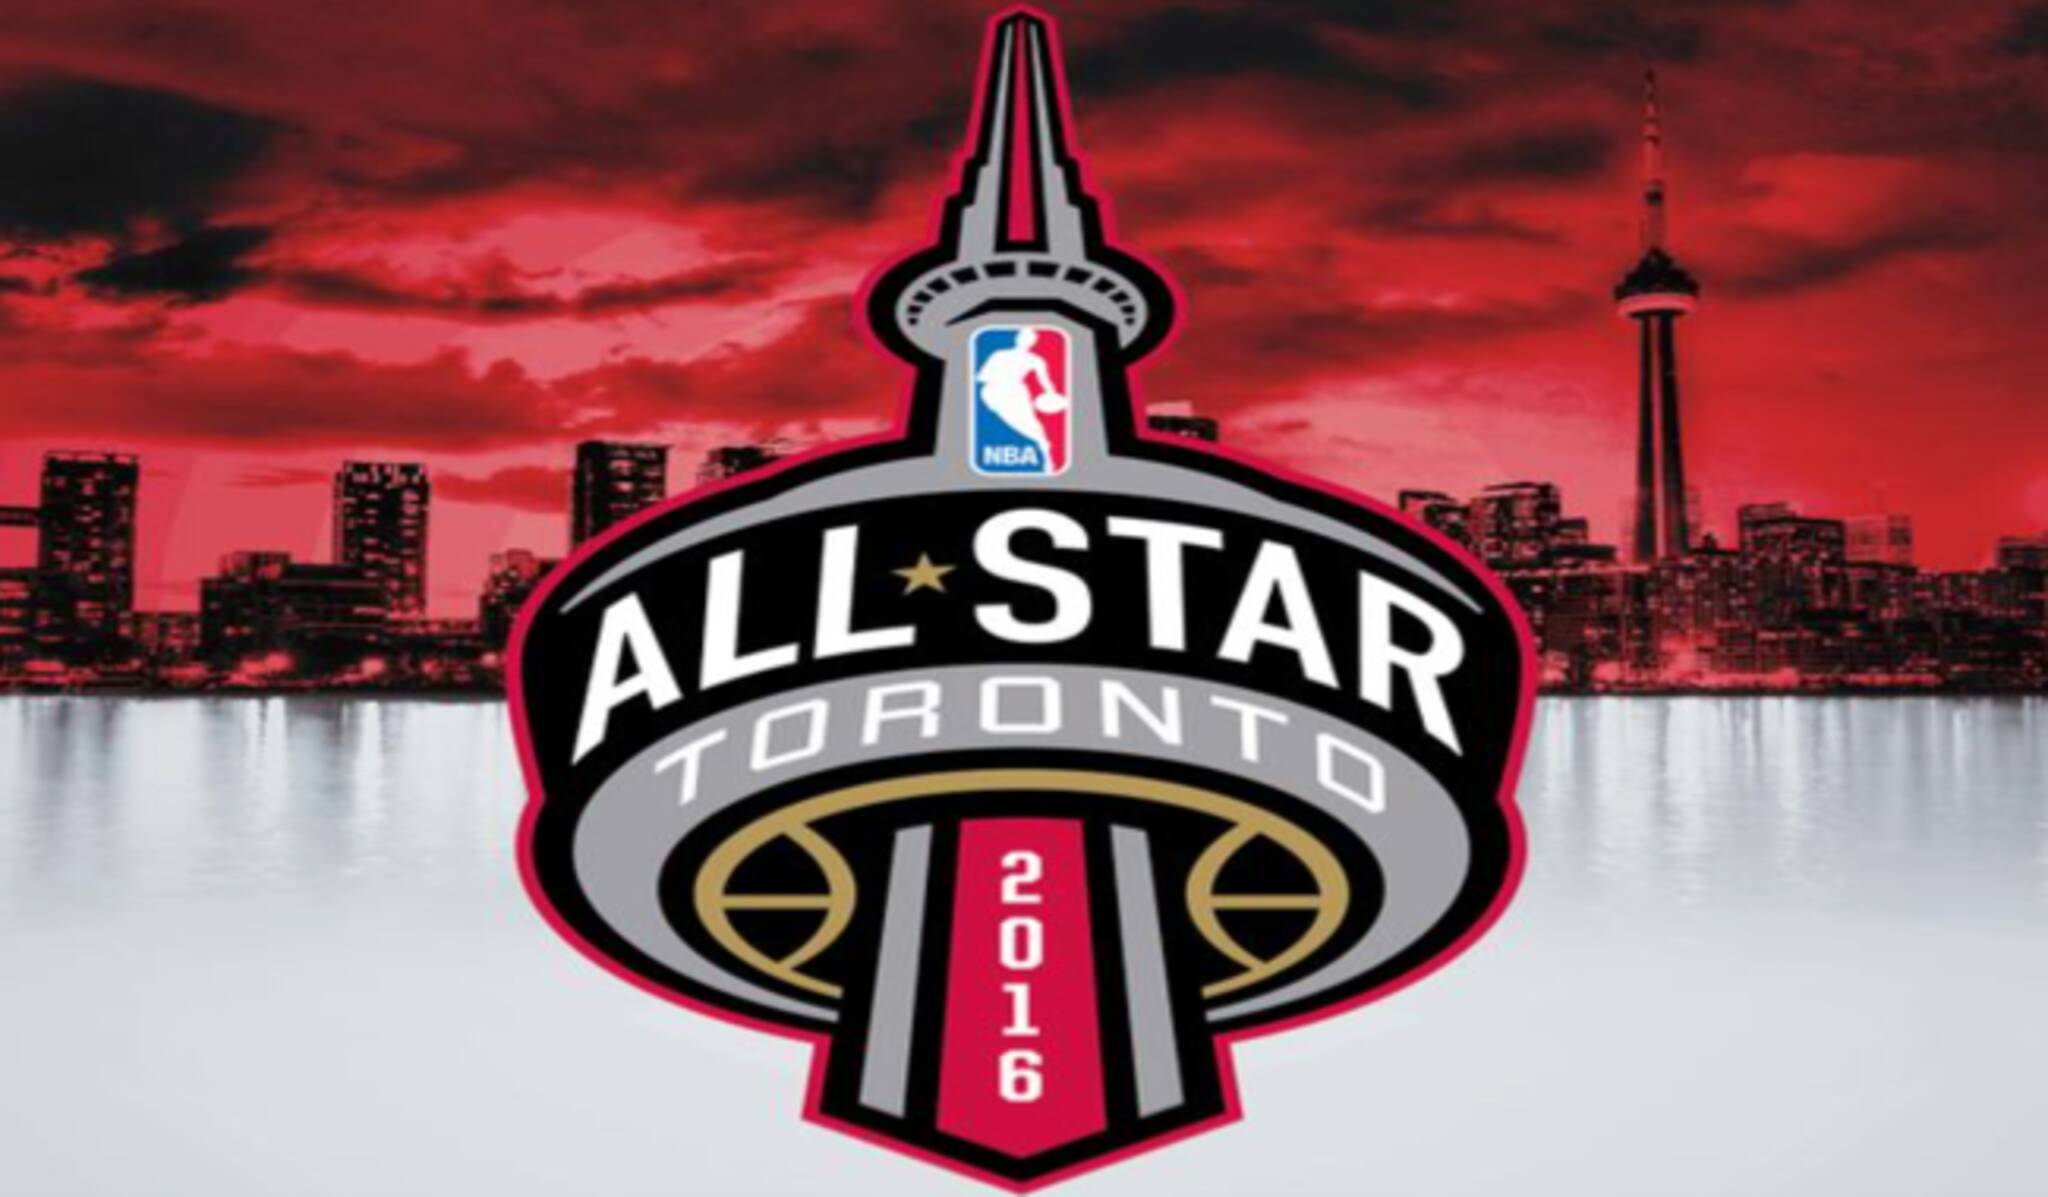 NBA All Star Weekend 2016 Toronto